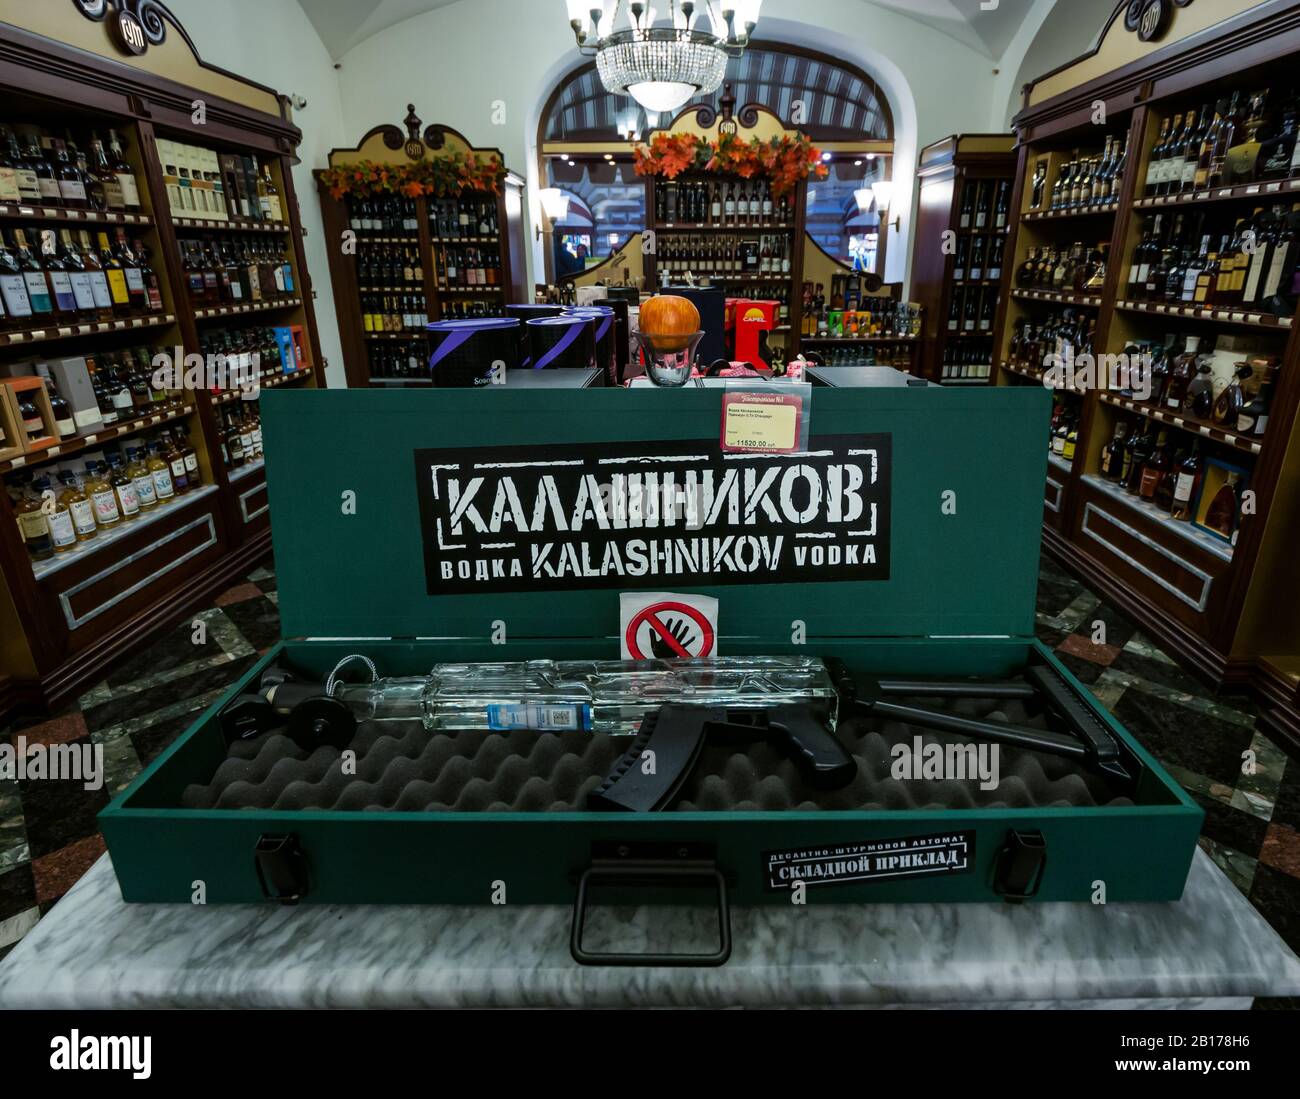 Vodka bottles & quirky gimmick Kalashnikov vodka, GUM department store display, Moscow, Russian Federation Stock Photo